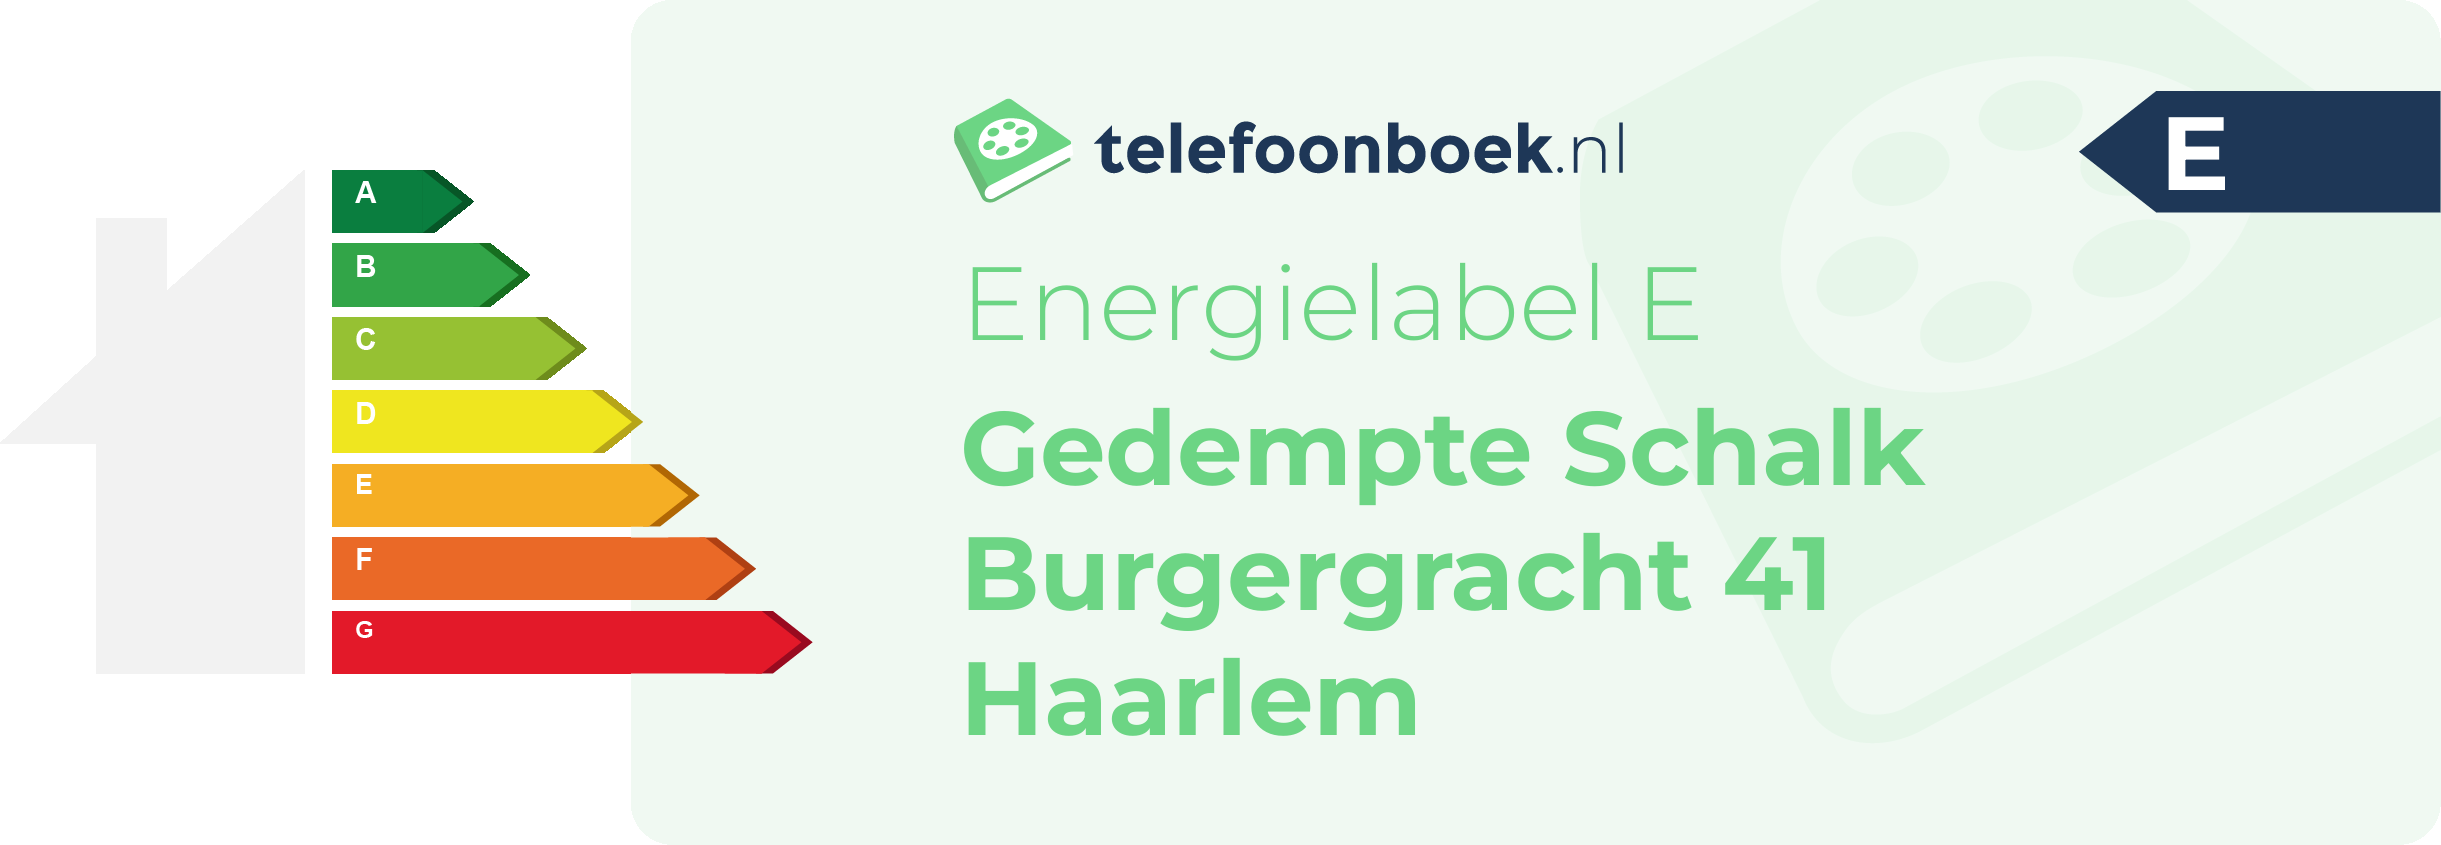 Energielabel Gedempte Schalk Burgergracht 41 Haarlem